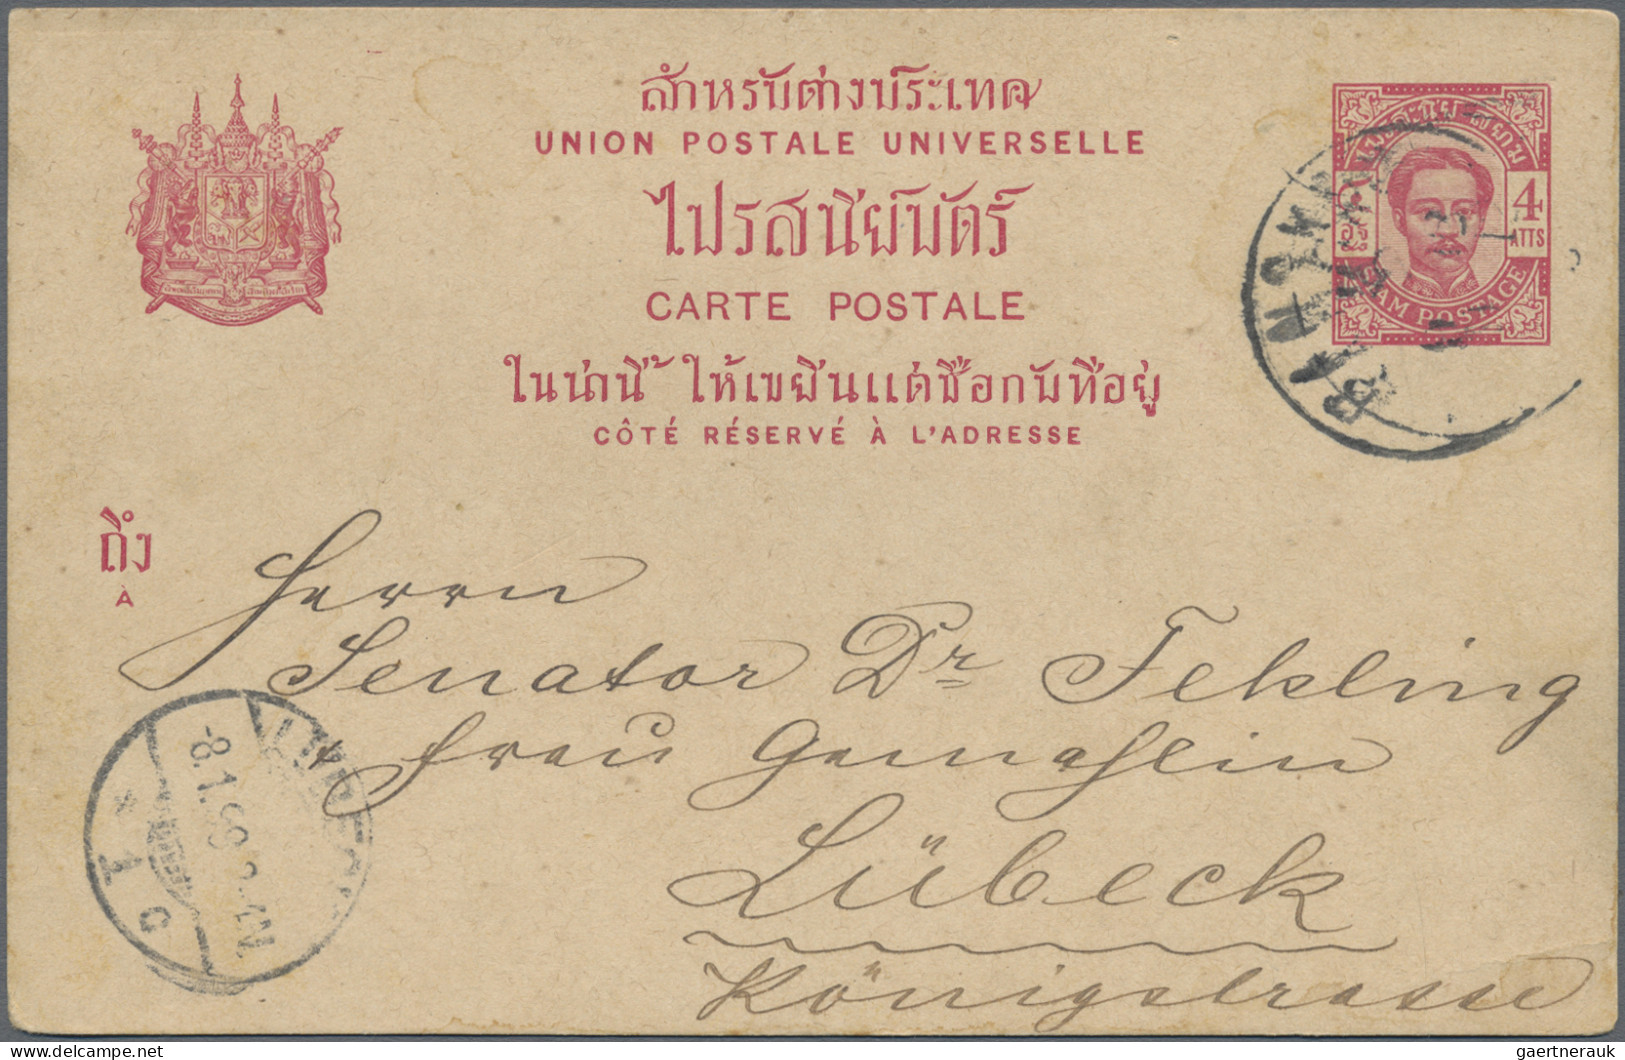 Asia: 1874/1943, covers/mostly used stationery (66) of Ceylon, Japan, Netherland